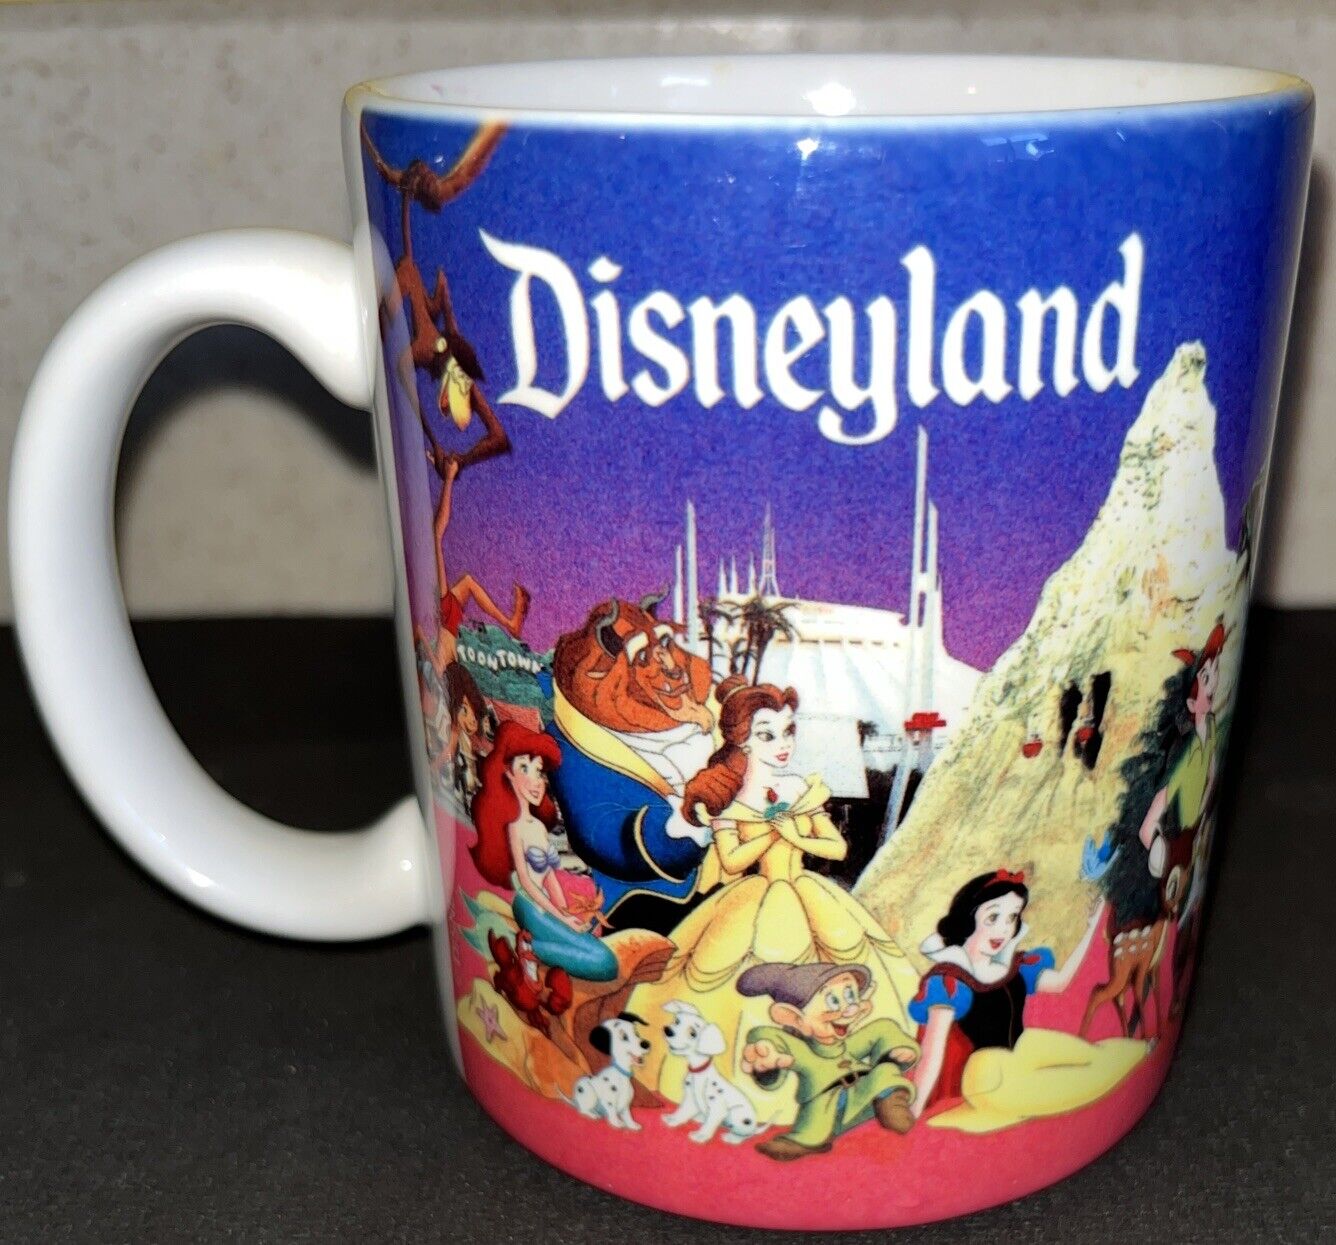 Disneyland Coffee Cup Mup “David”